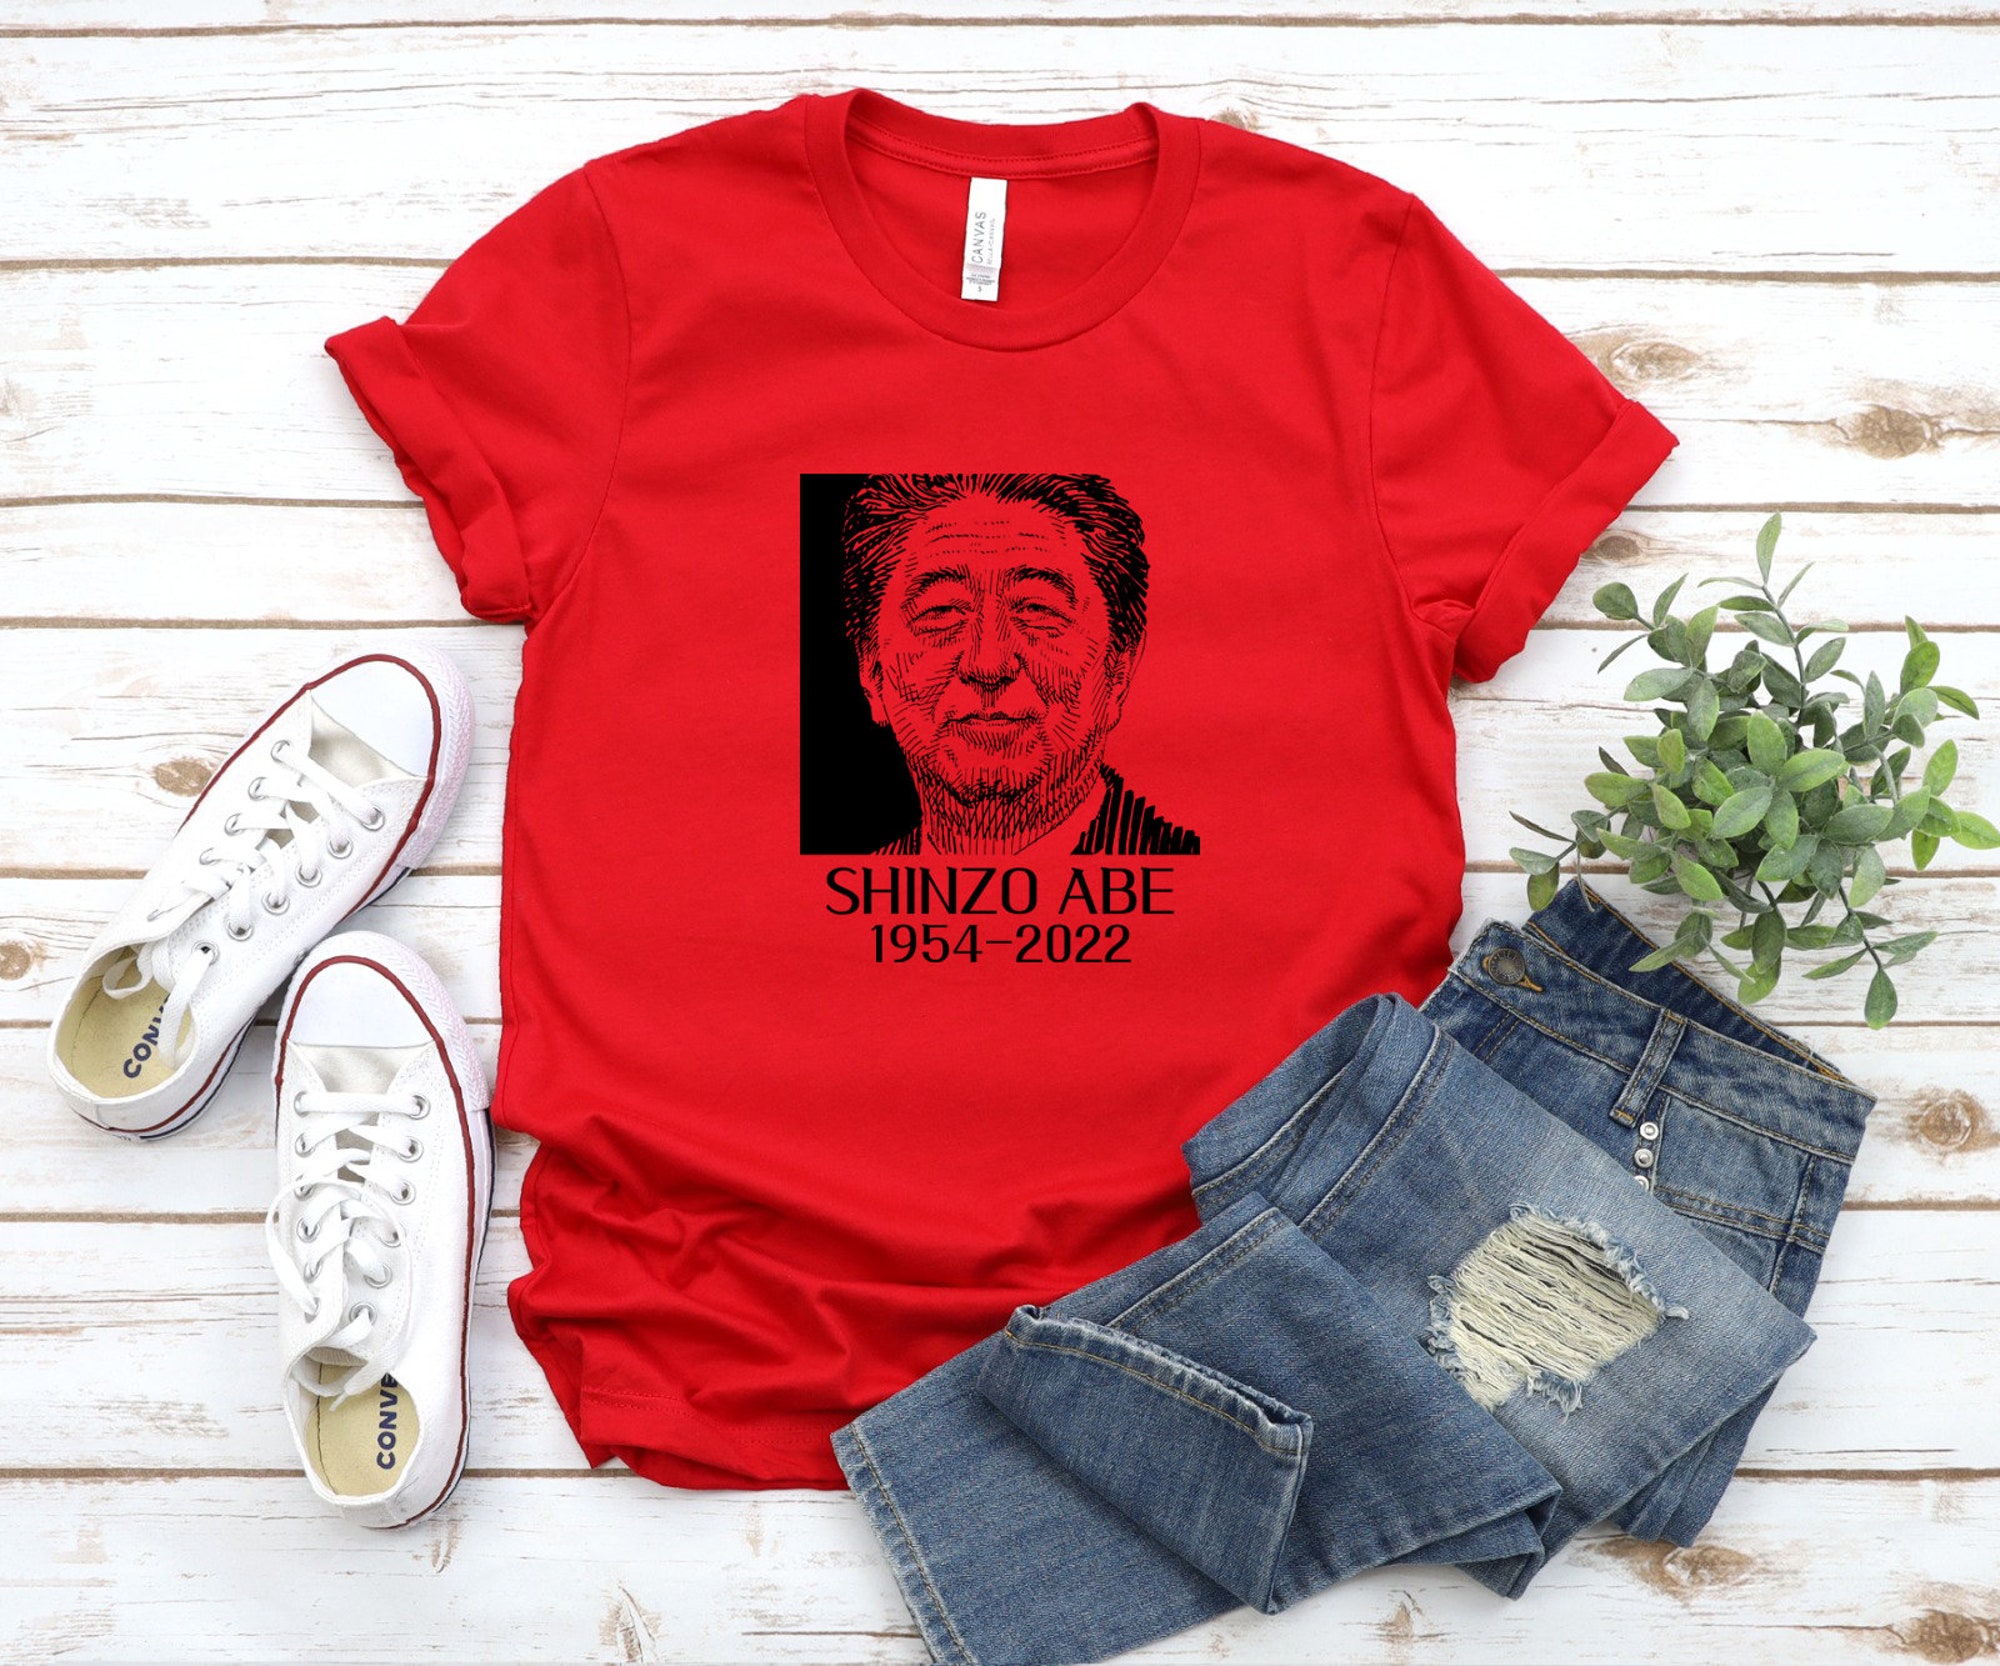 Discover Shinzo Abe Shirt, Thank You For The Memories Shirt